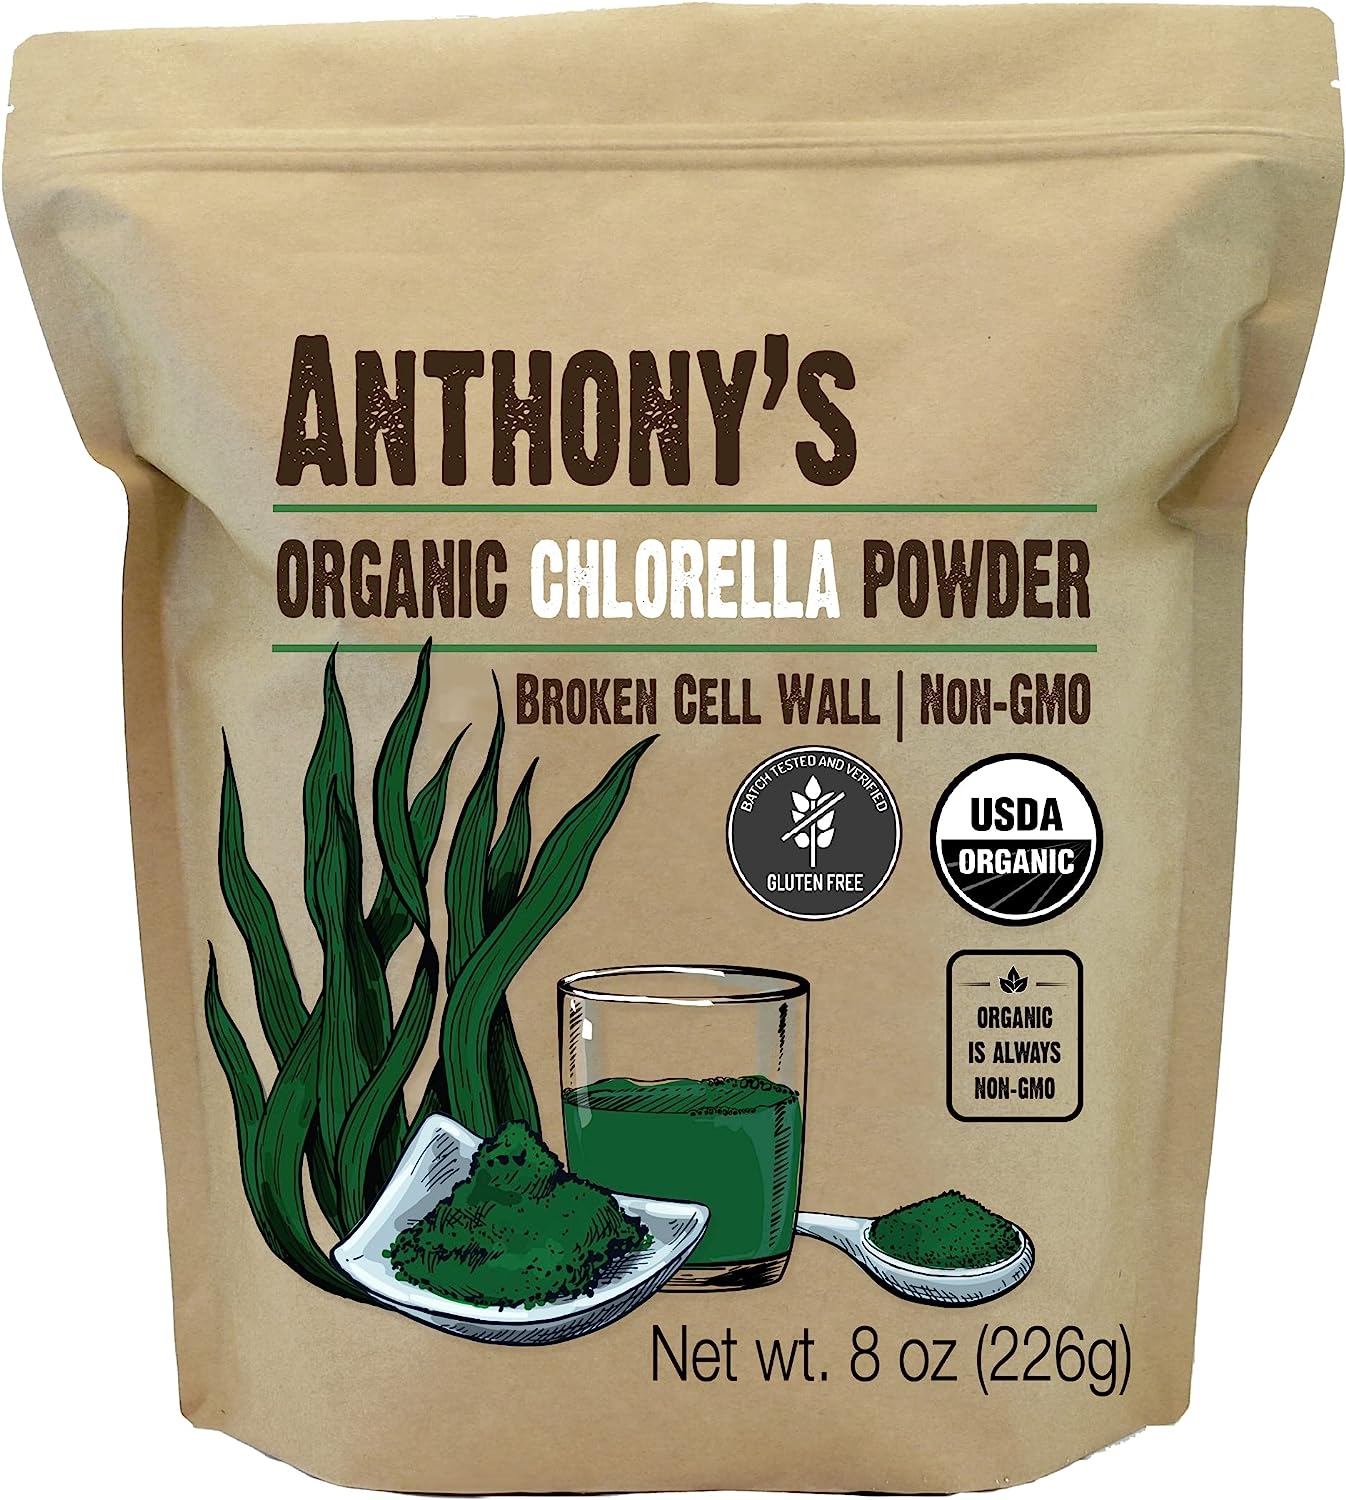 Anthony's Organic Chlorella Powder, 8 oz, Non GMO, [...]